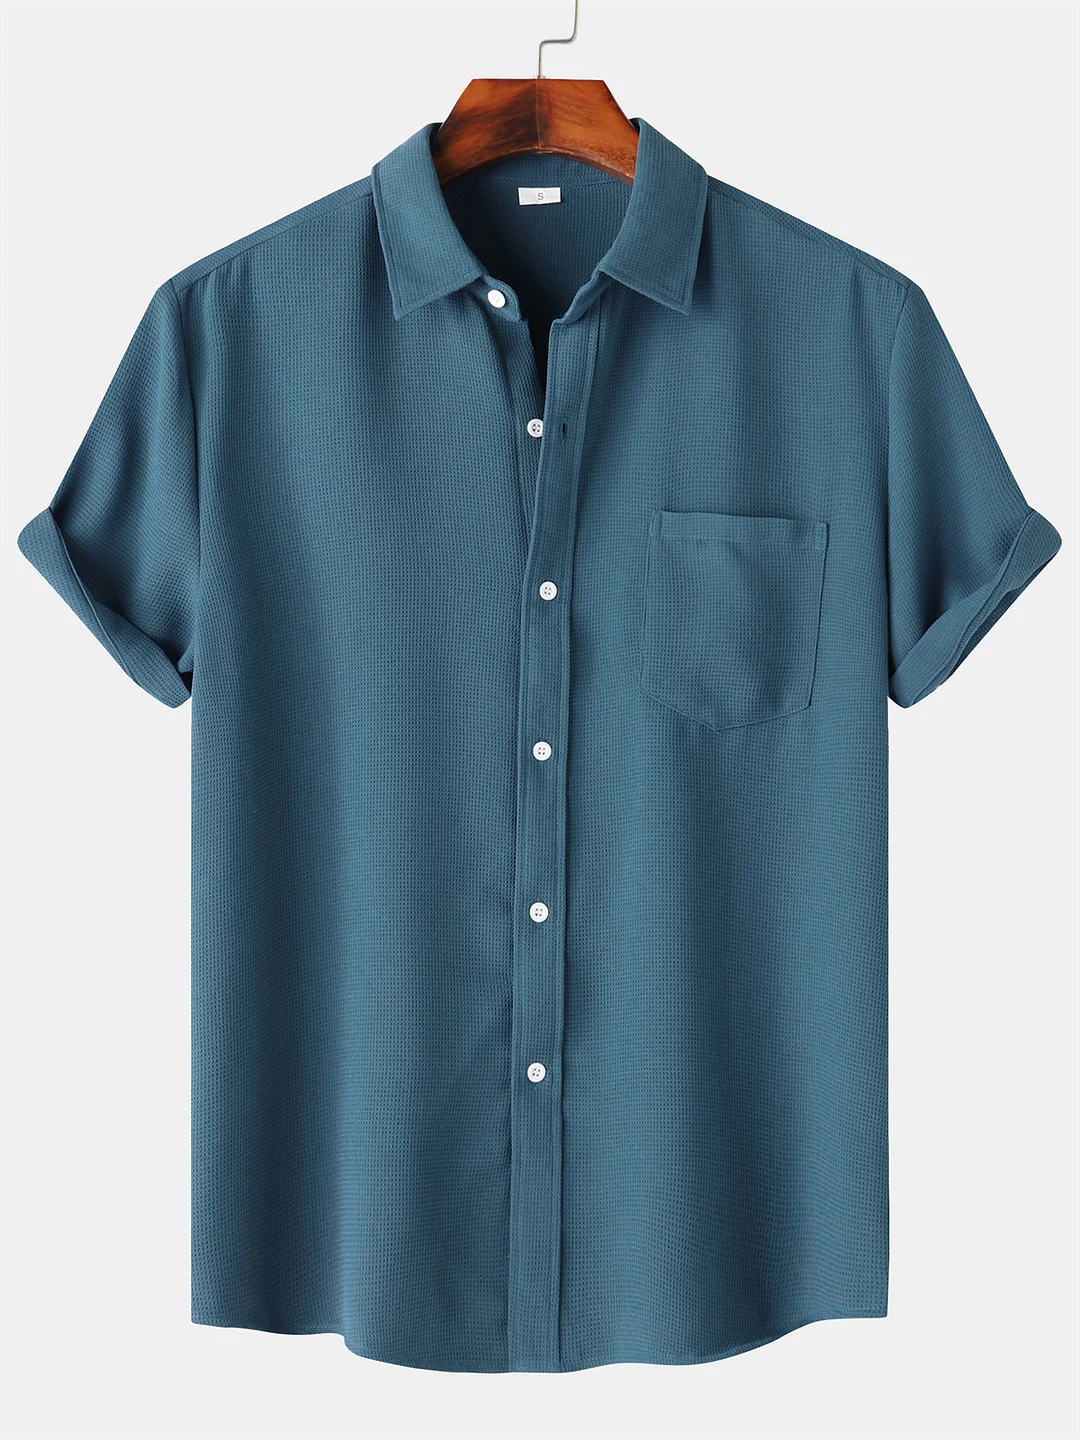 Suitmens Men's Waffle Pocket Casual Short Sleeve Shirt